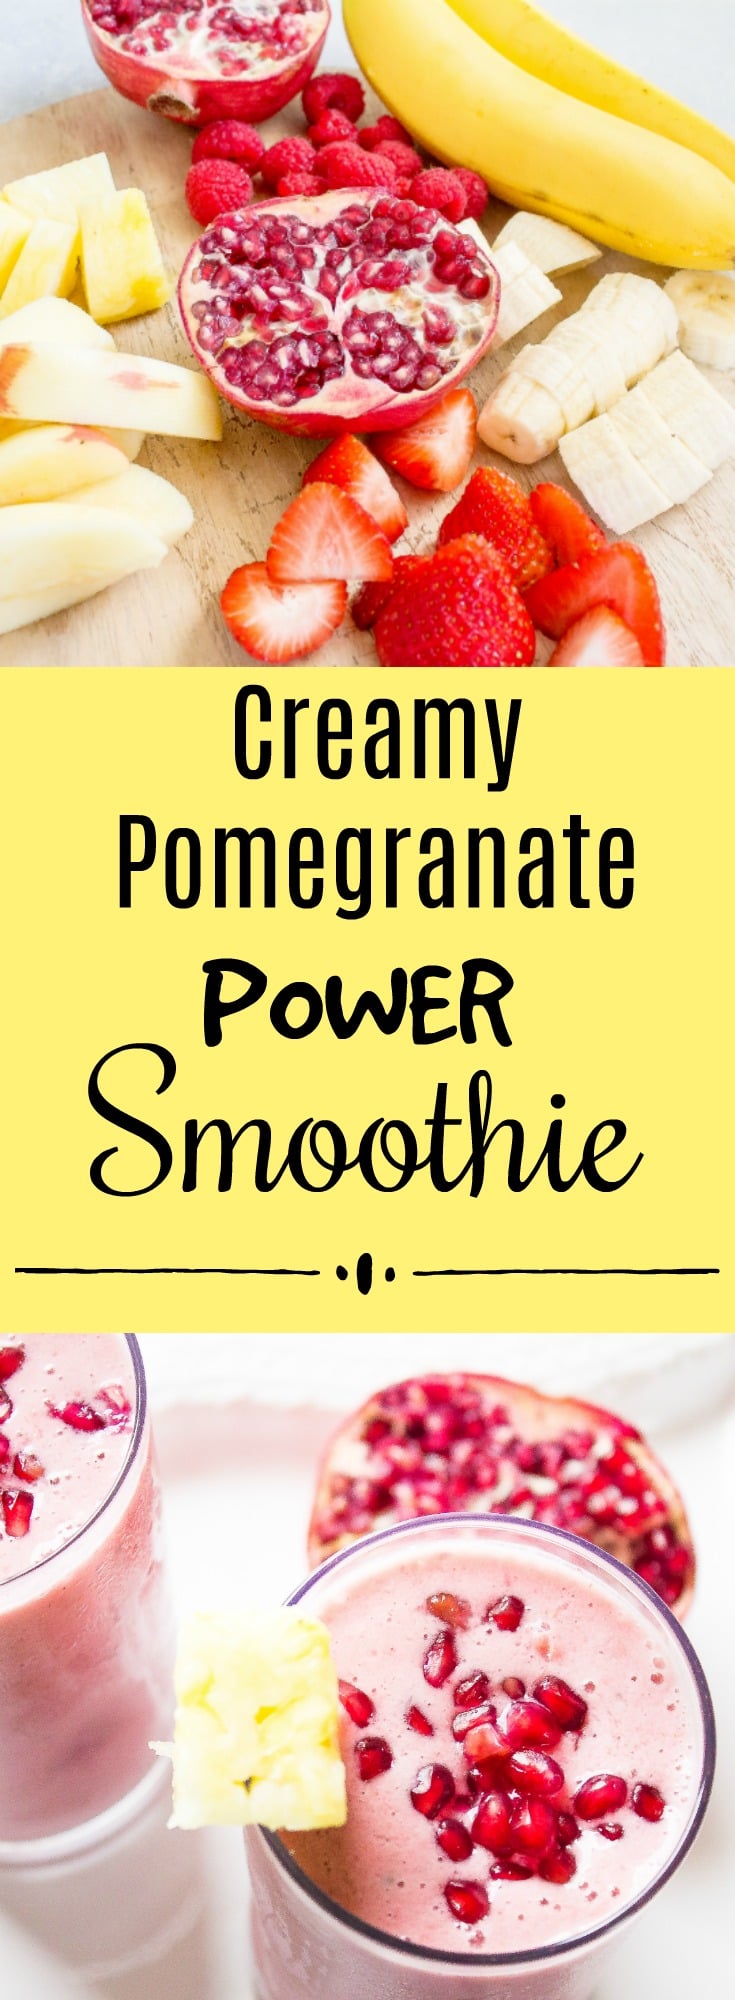 Creamy Pomegranate Power Smoothie